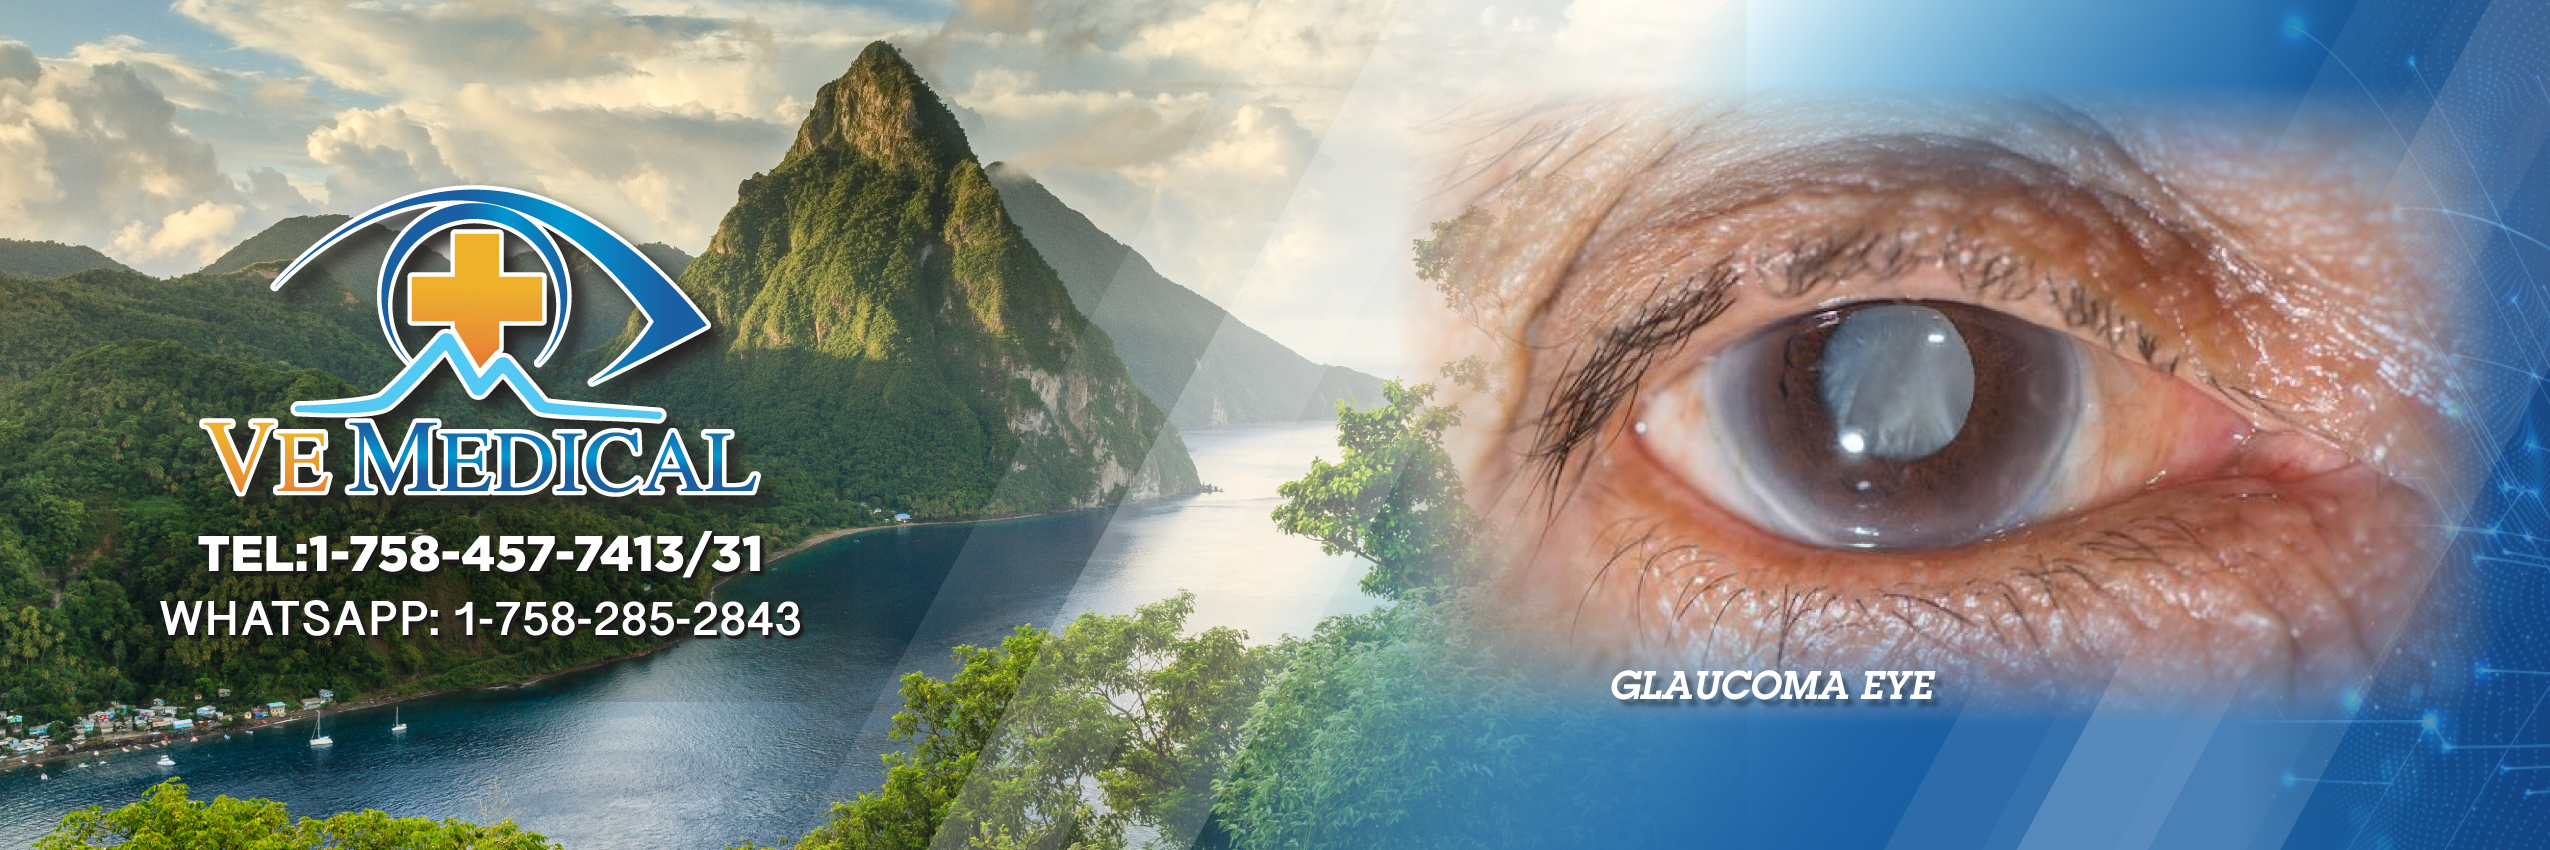 website-template-fo-ve-med-banner-Glaucoma-eye